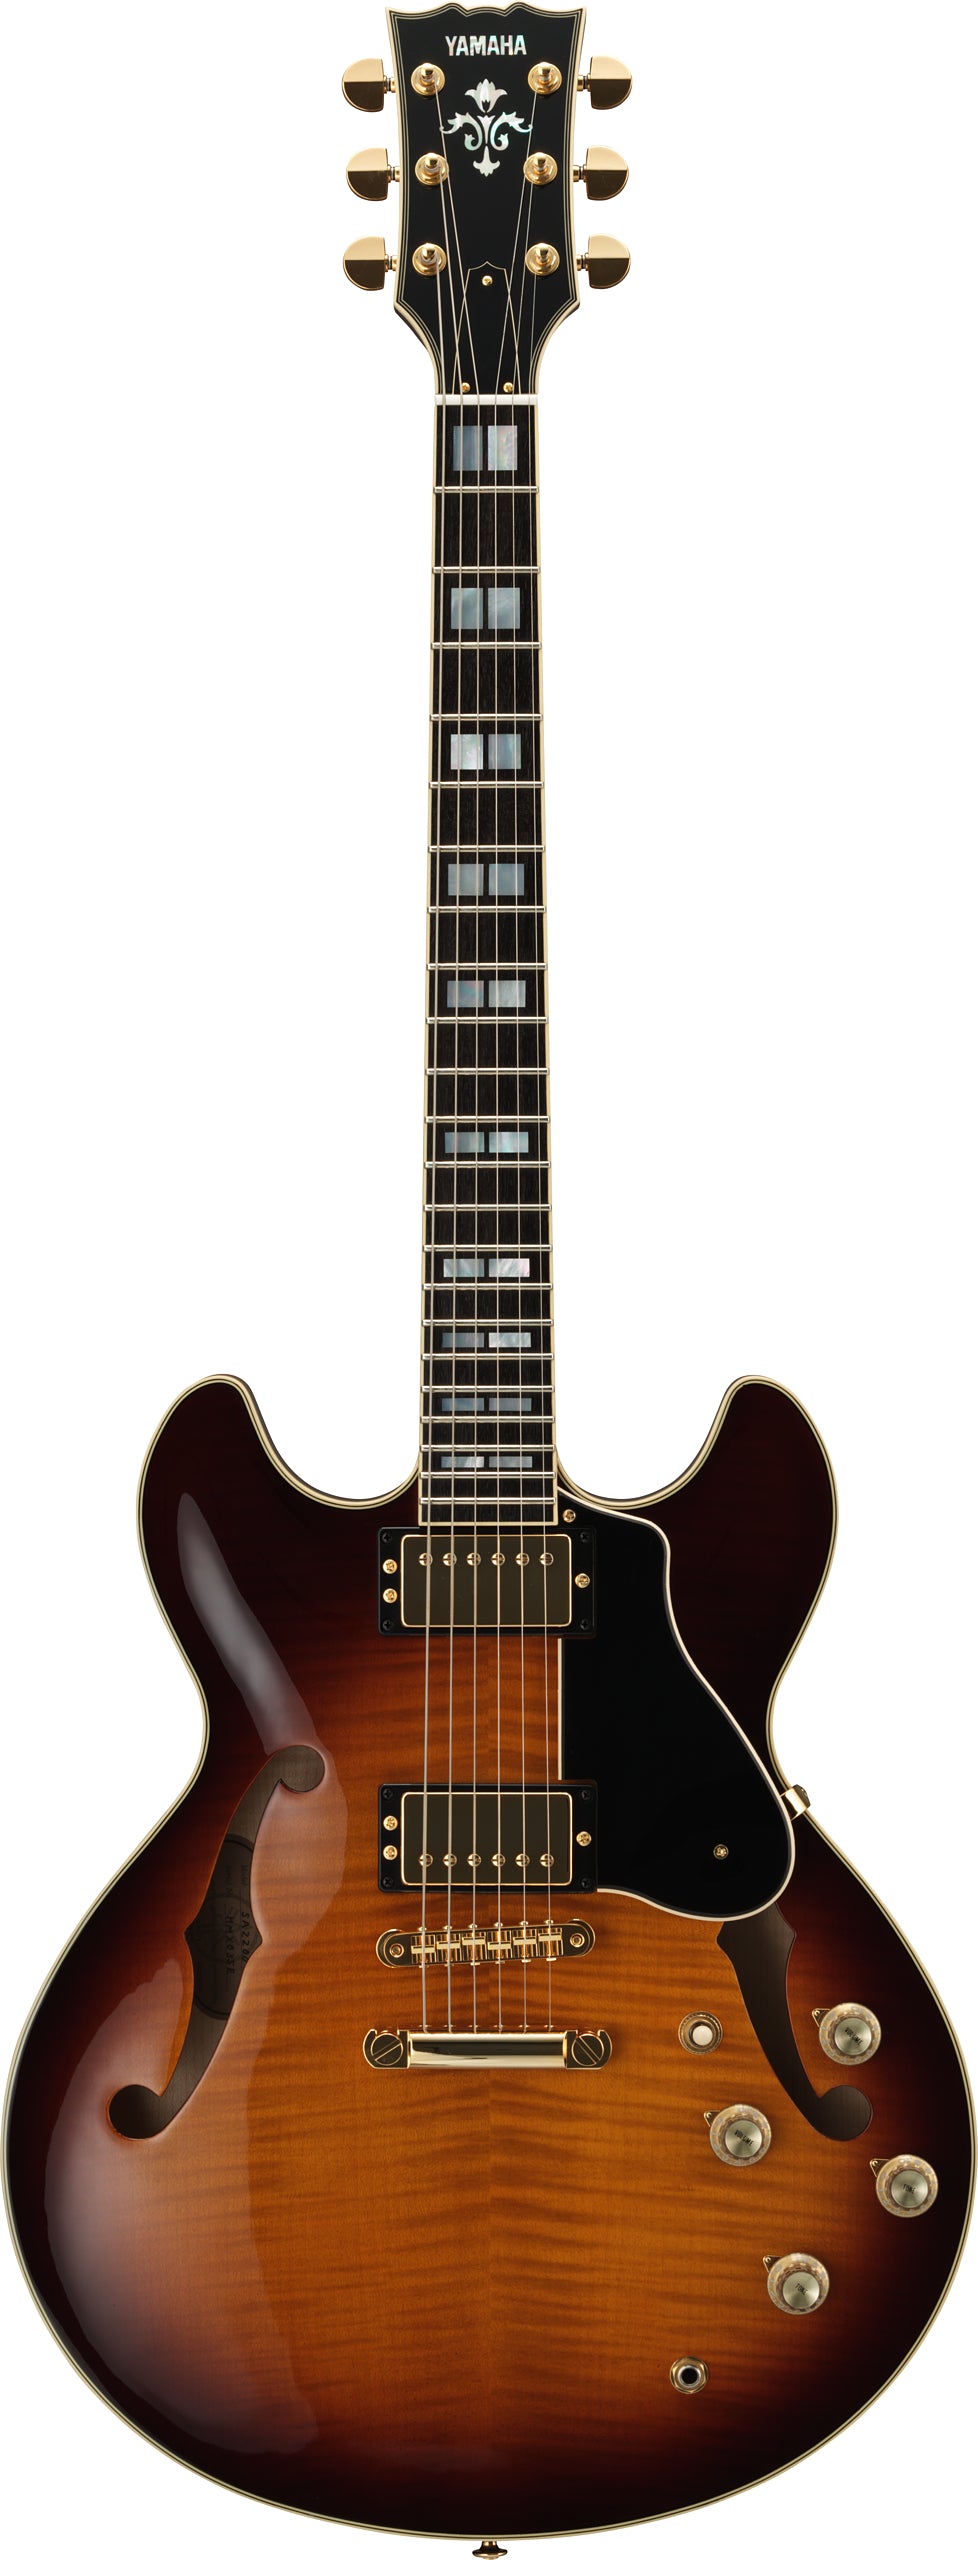 Yamaha SA2200 BS Hollow Body Guitar w/Case - Brown Sunburst - A